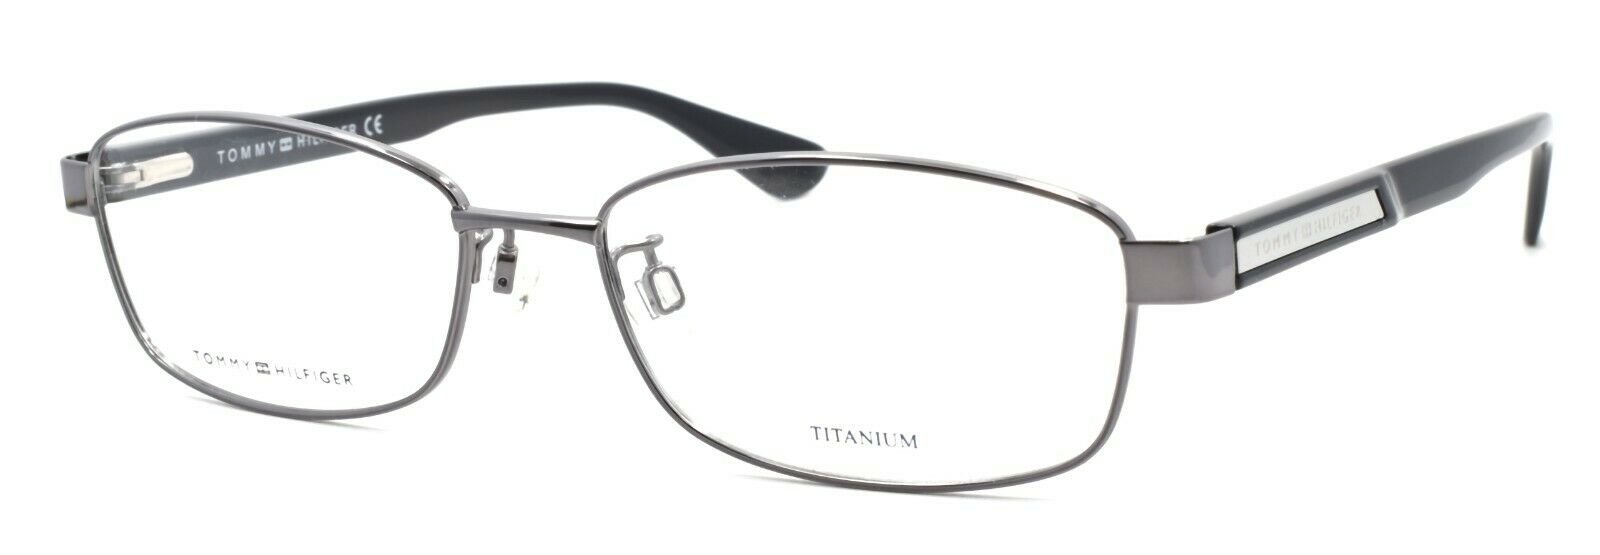 1-TOMMY HILFIGER TH 1566/F KJ1 Men's Eyeglasses TITANIUM 56-17-145 Dark Ruthenium-716736025254-IKSpecs